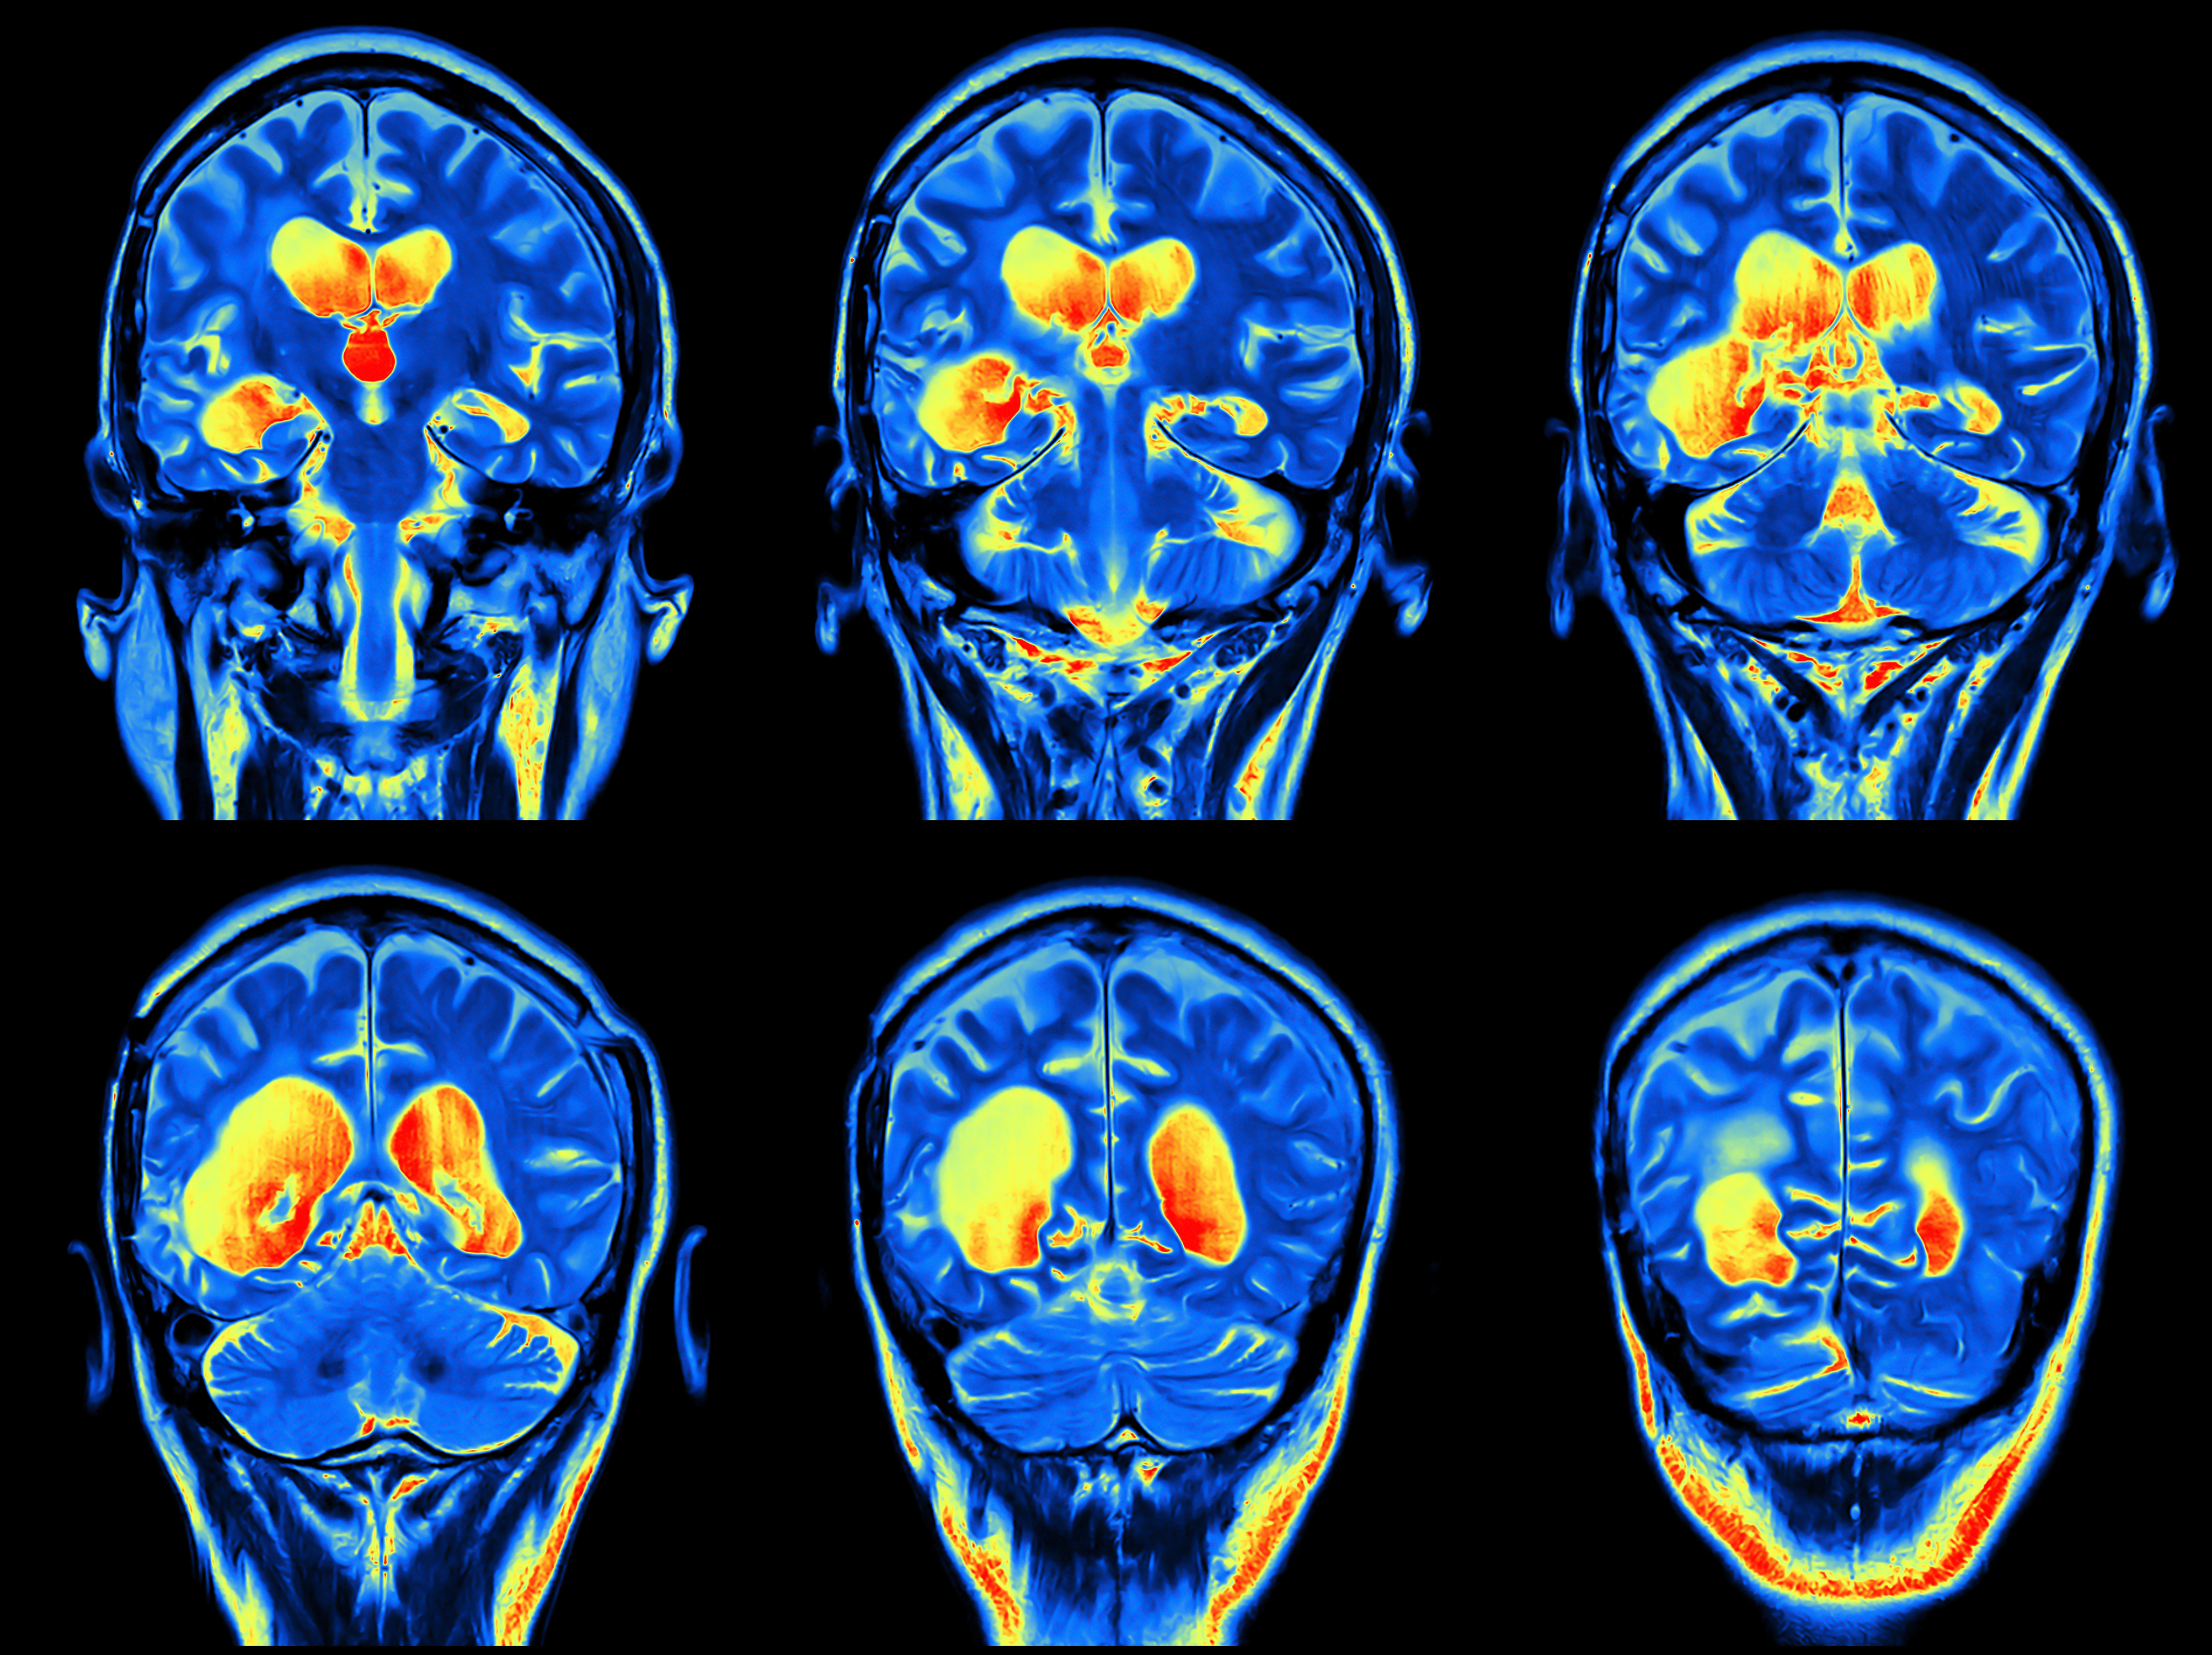 Brain imaging. Снимки головного мозга. Томография головного мозга. Мрт головного мозга с контрастом. Кт головного мозга с контрастом.